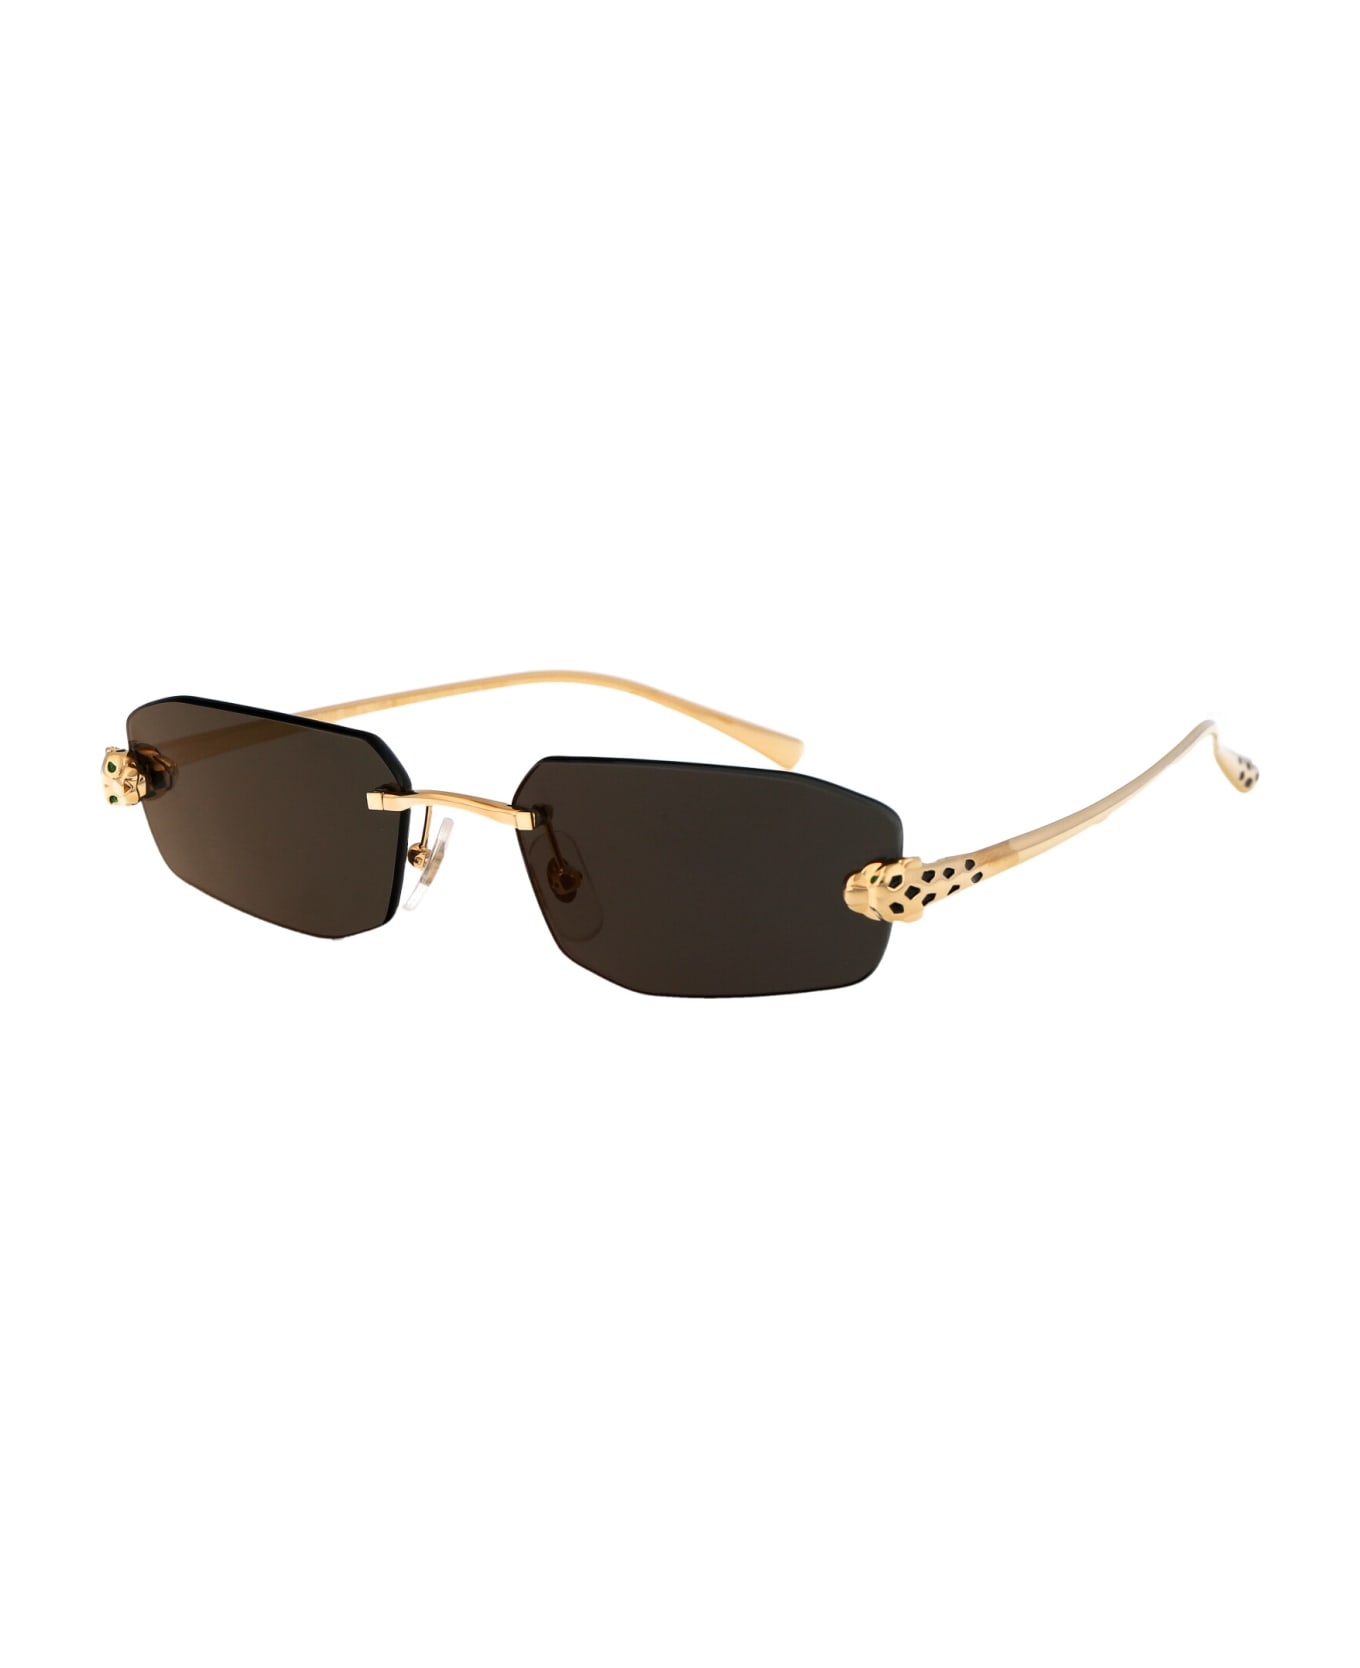 Cartier Eyewear Ct0474s Sunglasses - 001 GOLD GOLD GREY